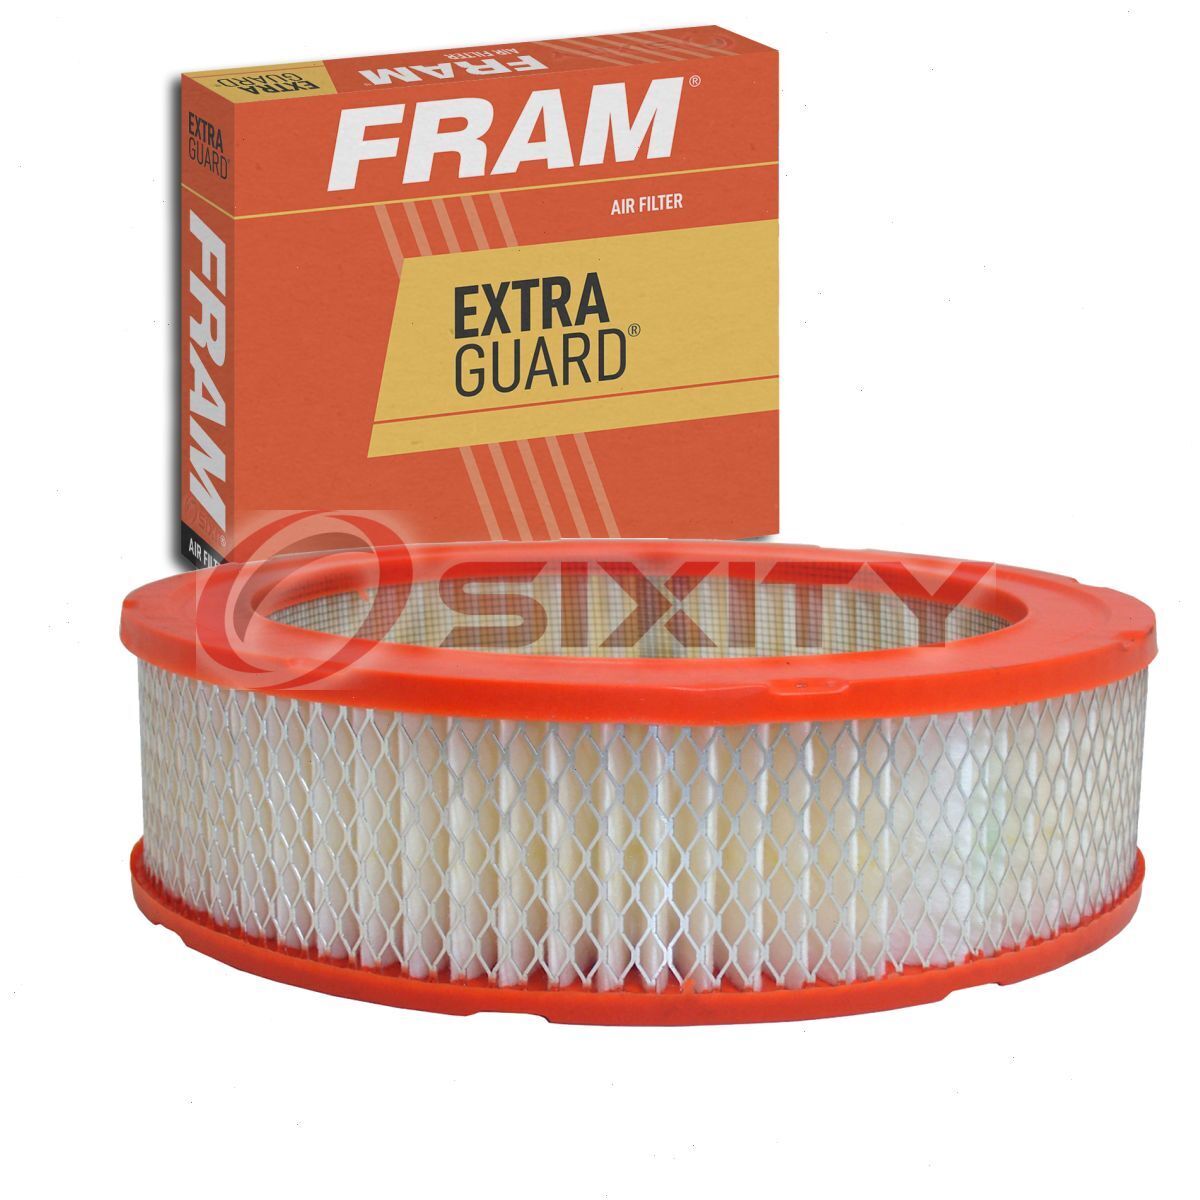 FRAM Extra Guard Air Filter for 1980-1983 Dodge Mirada Intake Inlet Manifold cy